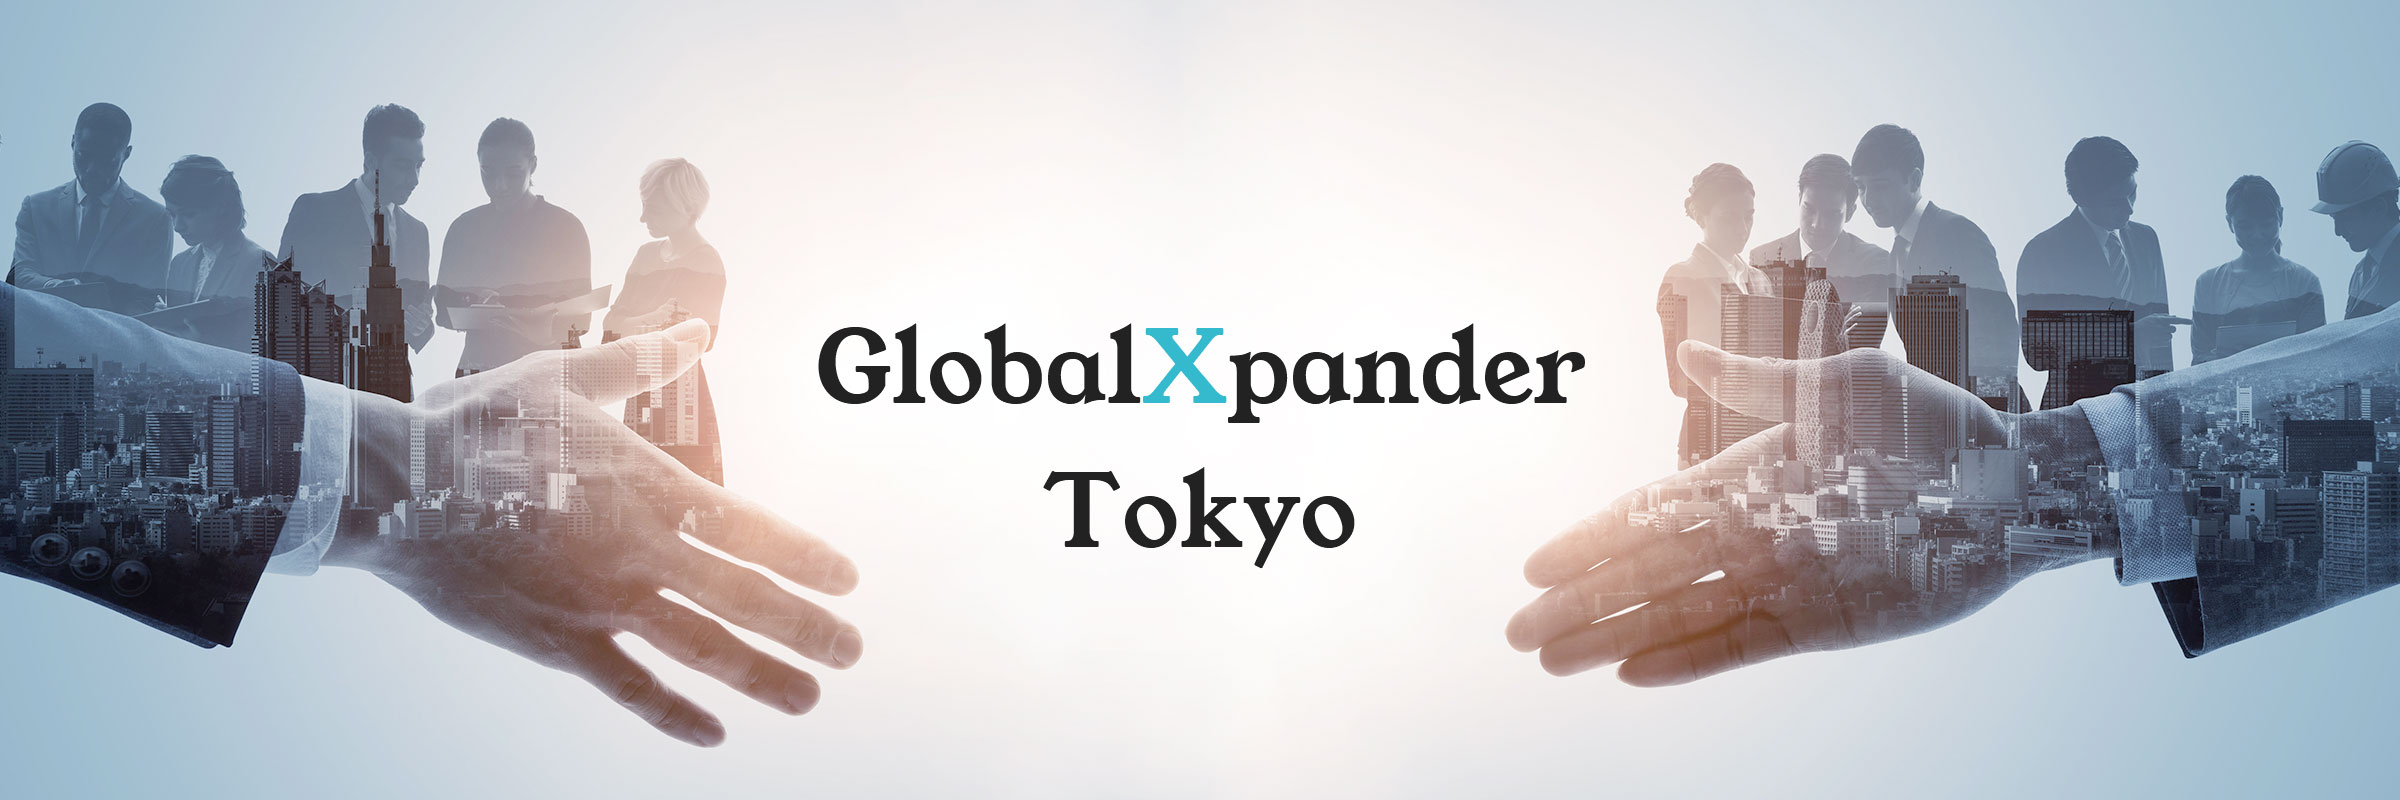 GlobalXpander Tokyo